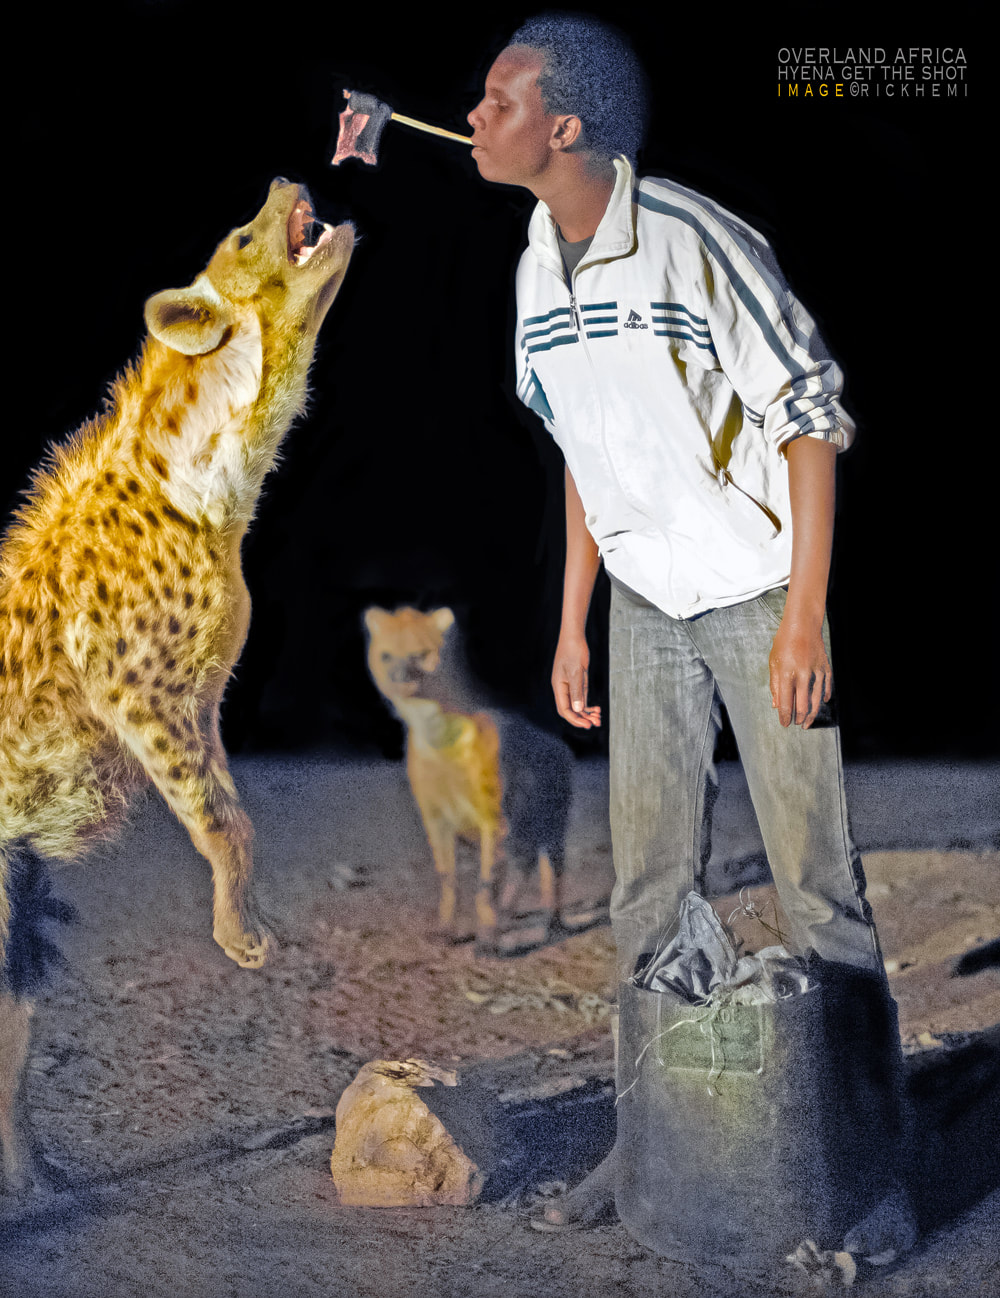 solo overland travel Africa, get the shot, hyena night feeding, image by Rick Hemi